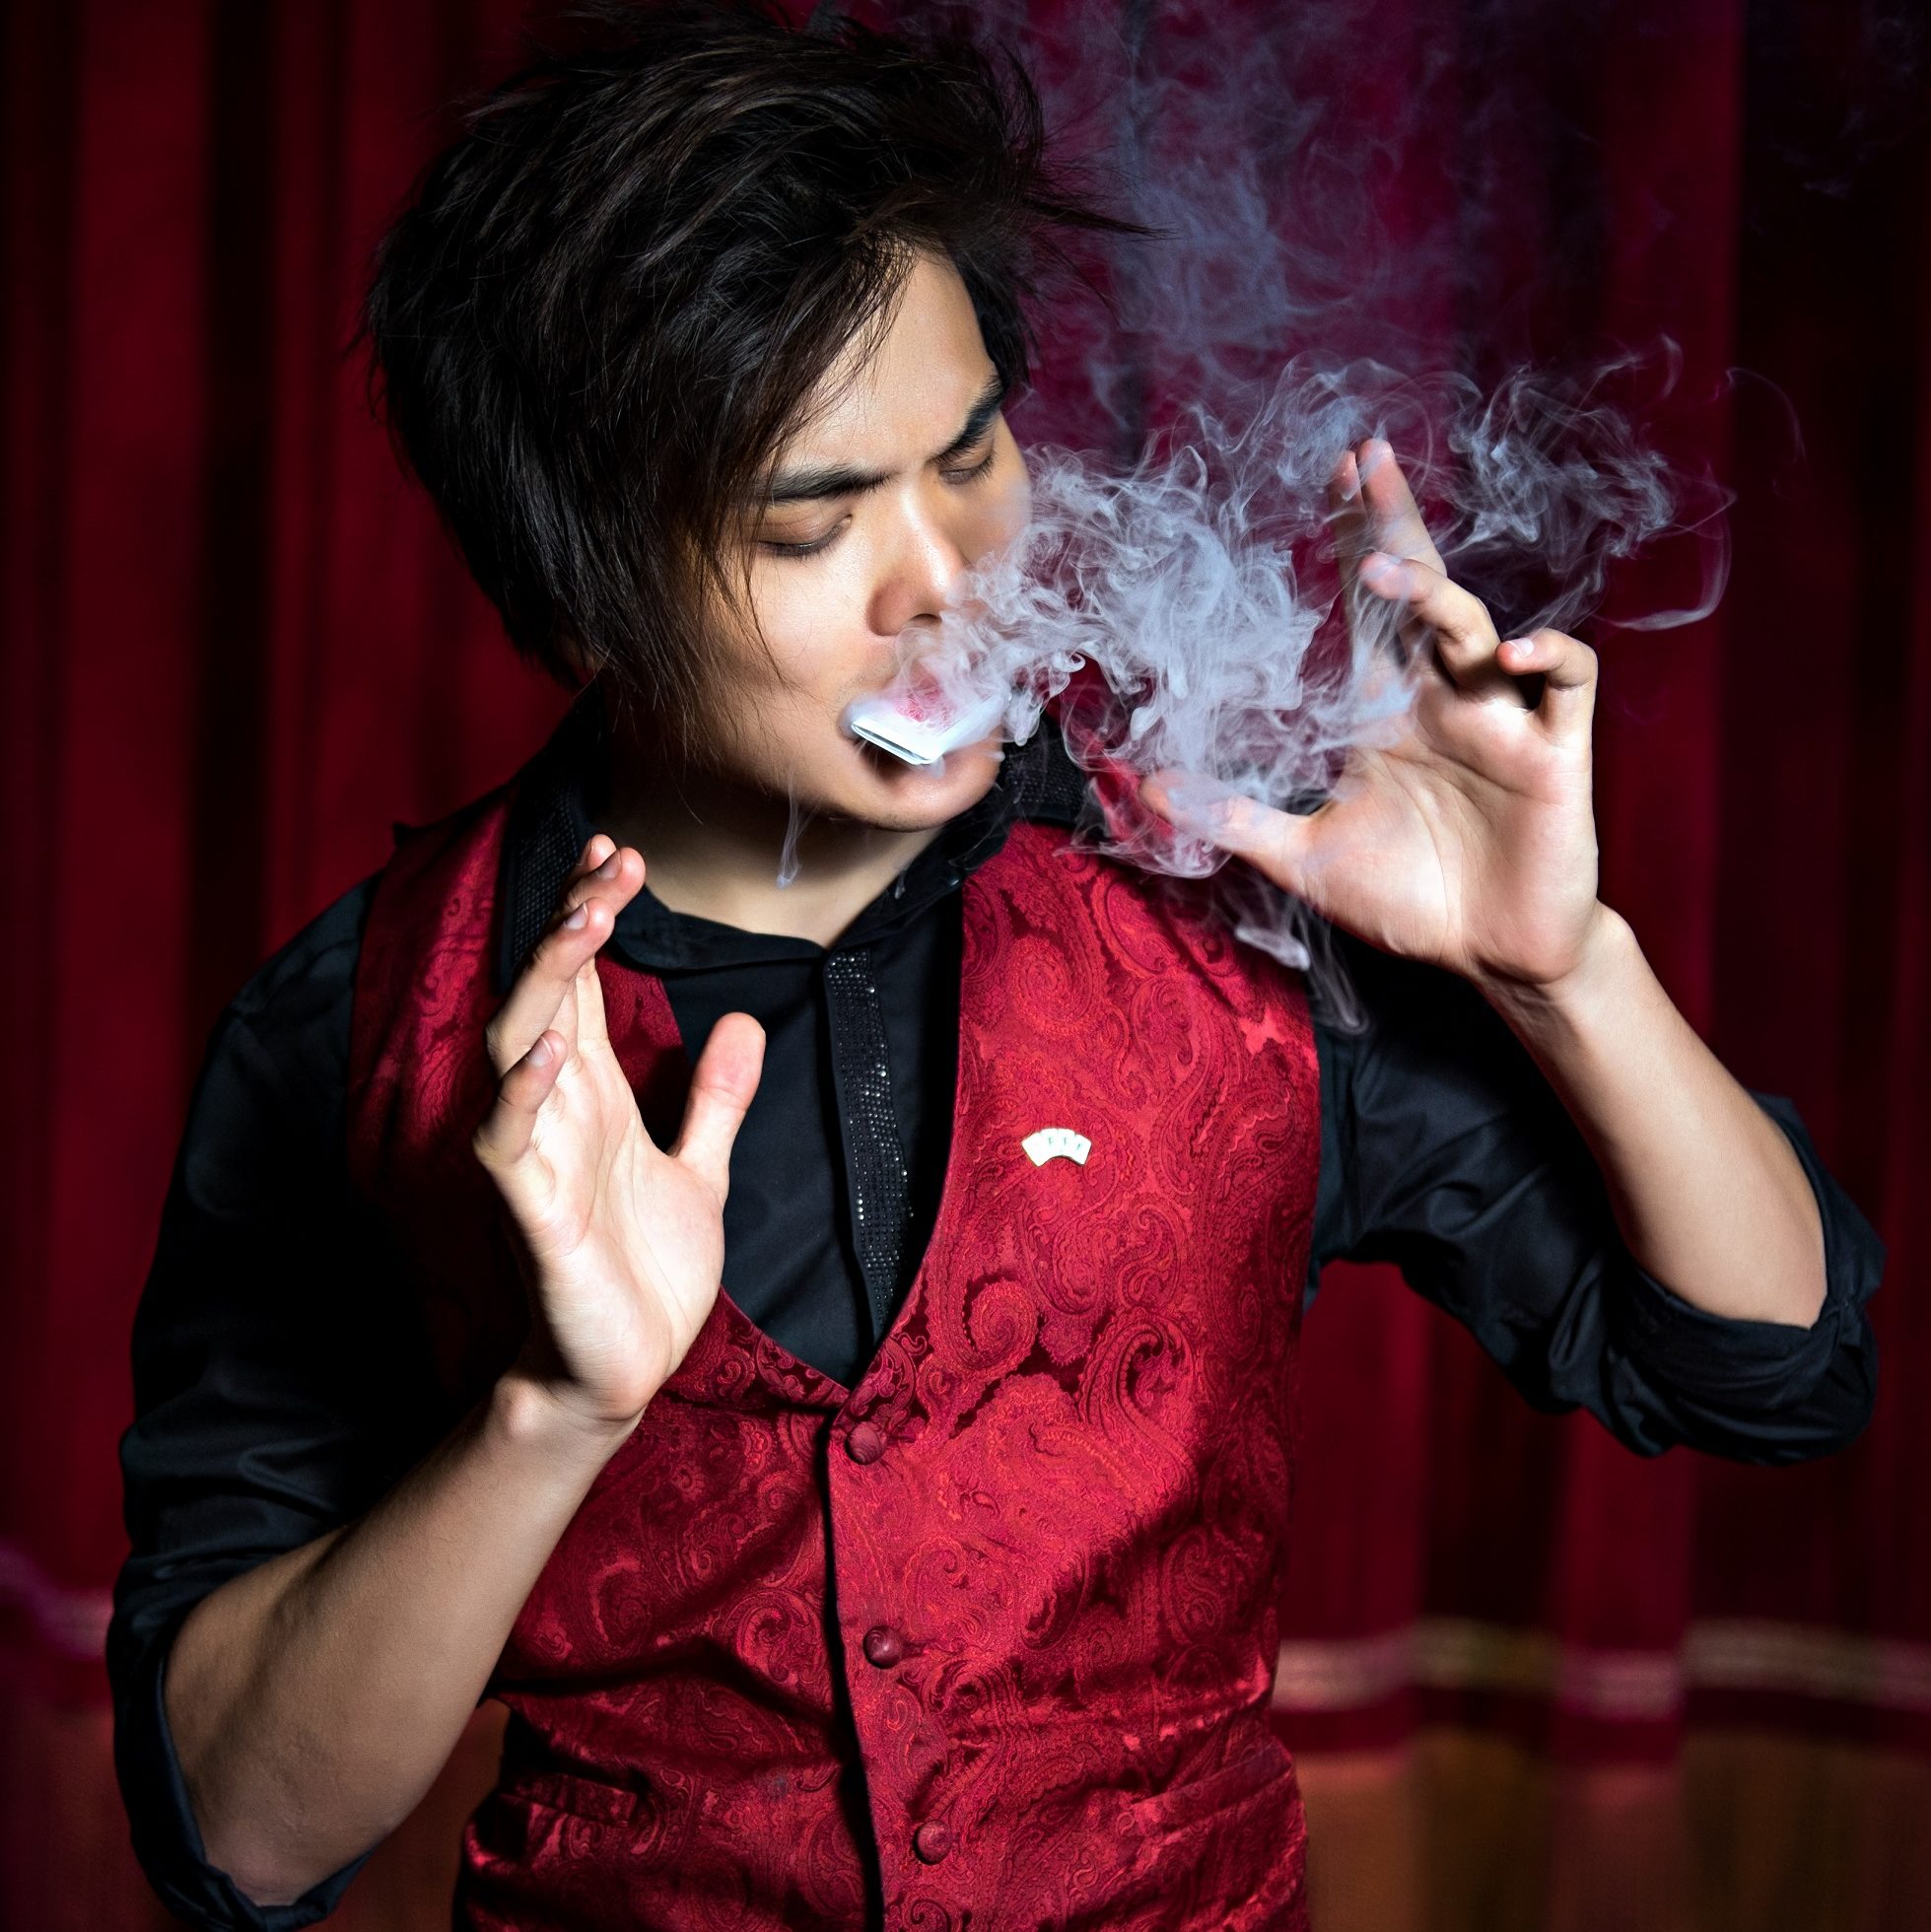 Shin Lim blowing smoke from cards